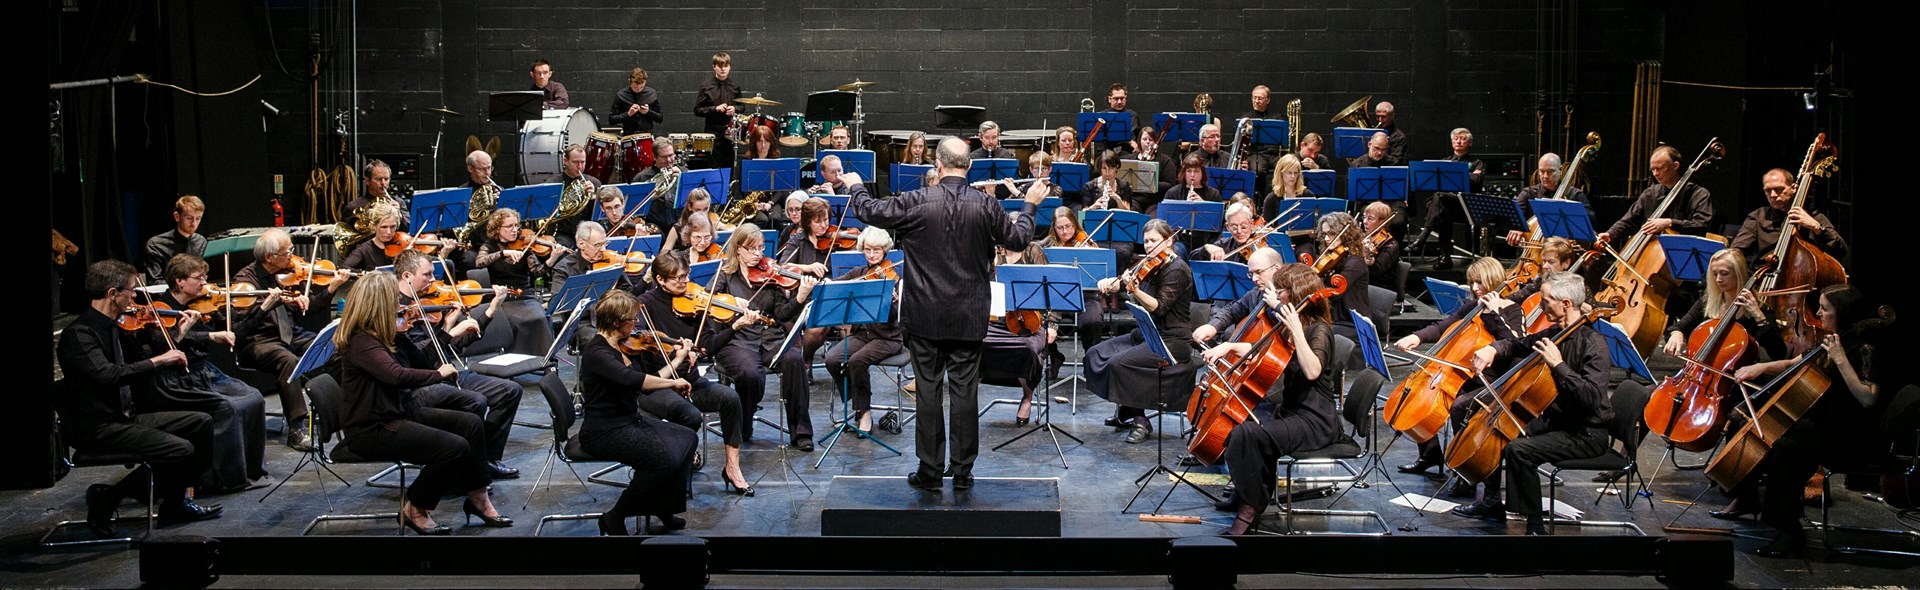 Horsham Symphony Orchestra Concert